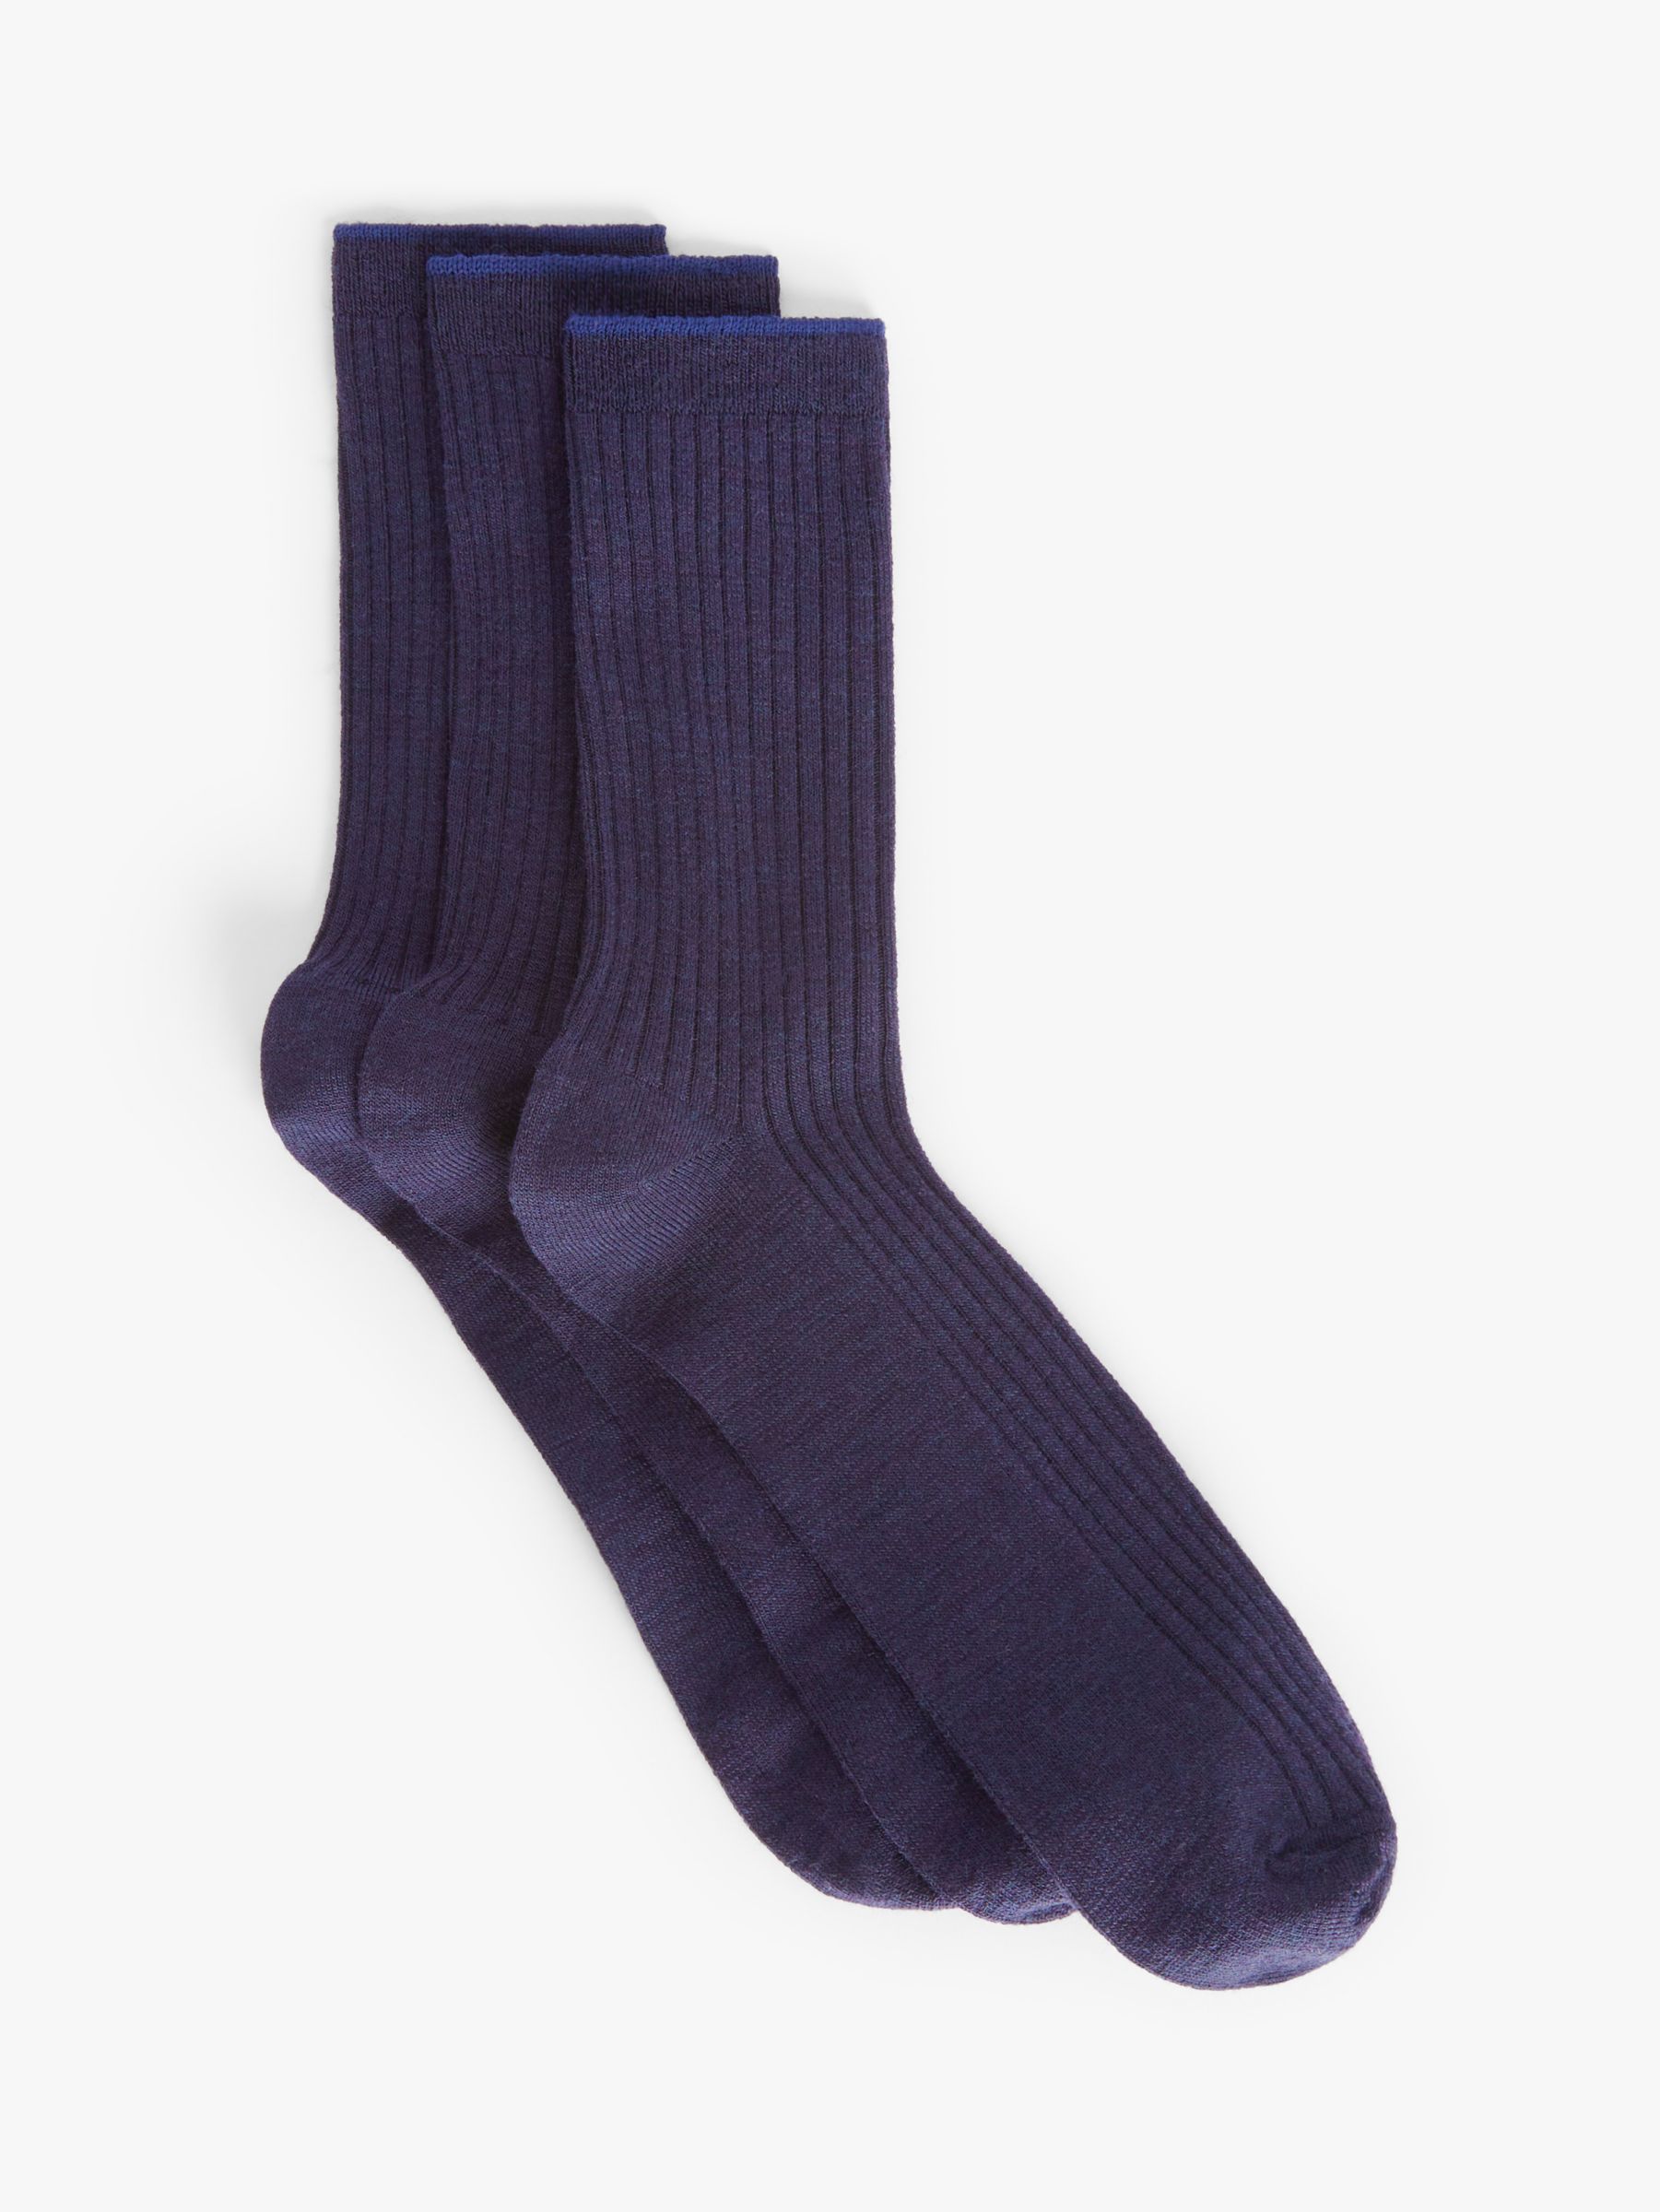 John Lewis Children's Wool Rich Socks, Pack of 3, Blue at John Lewis ...